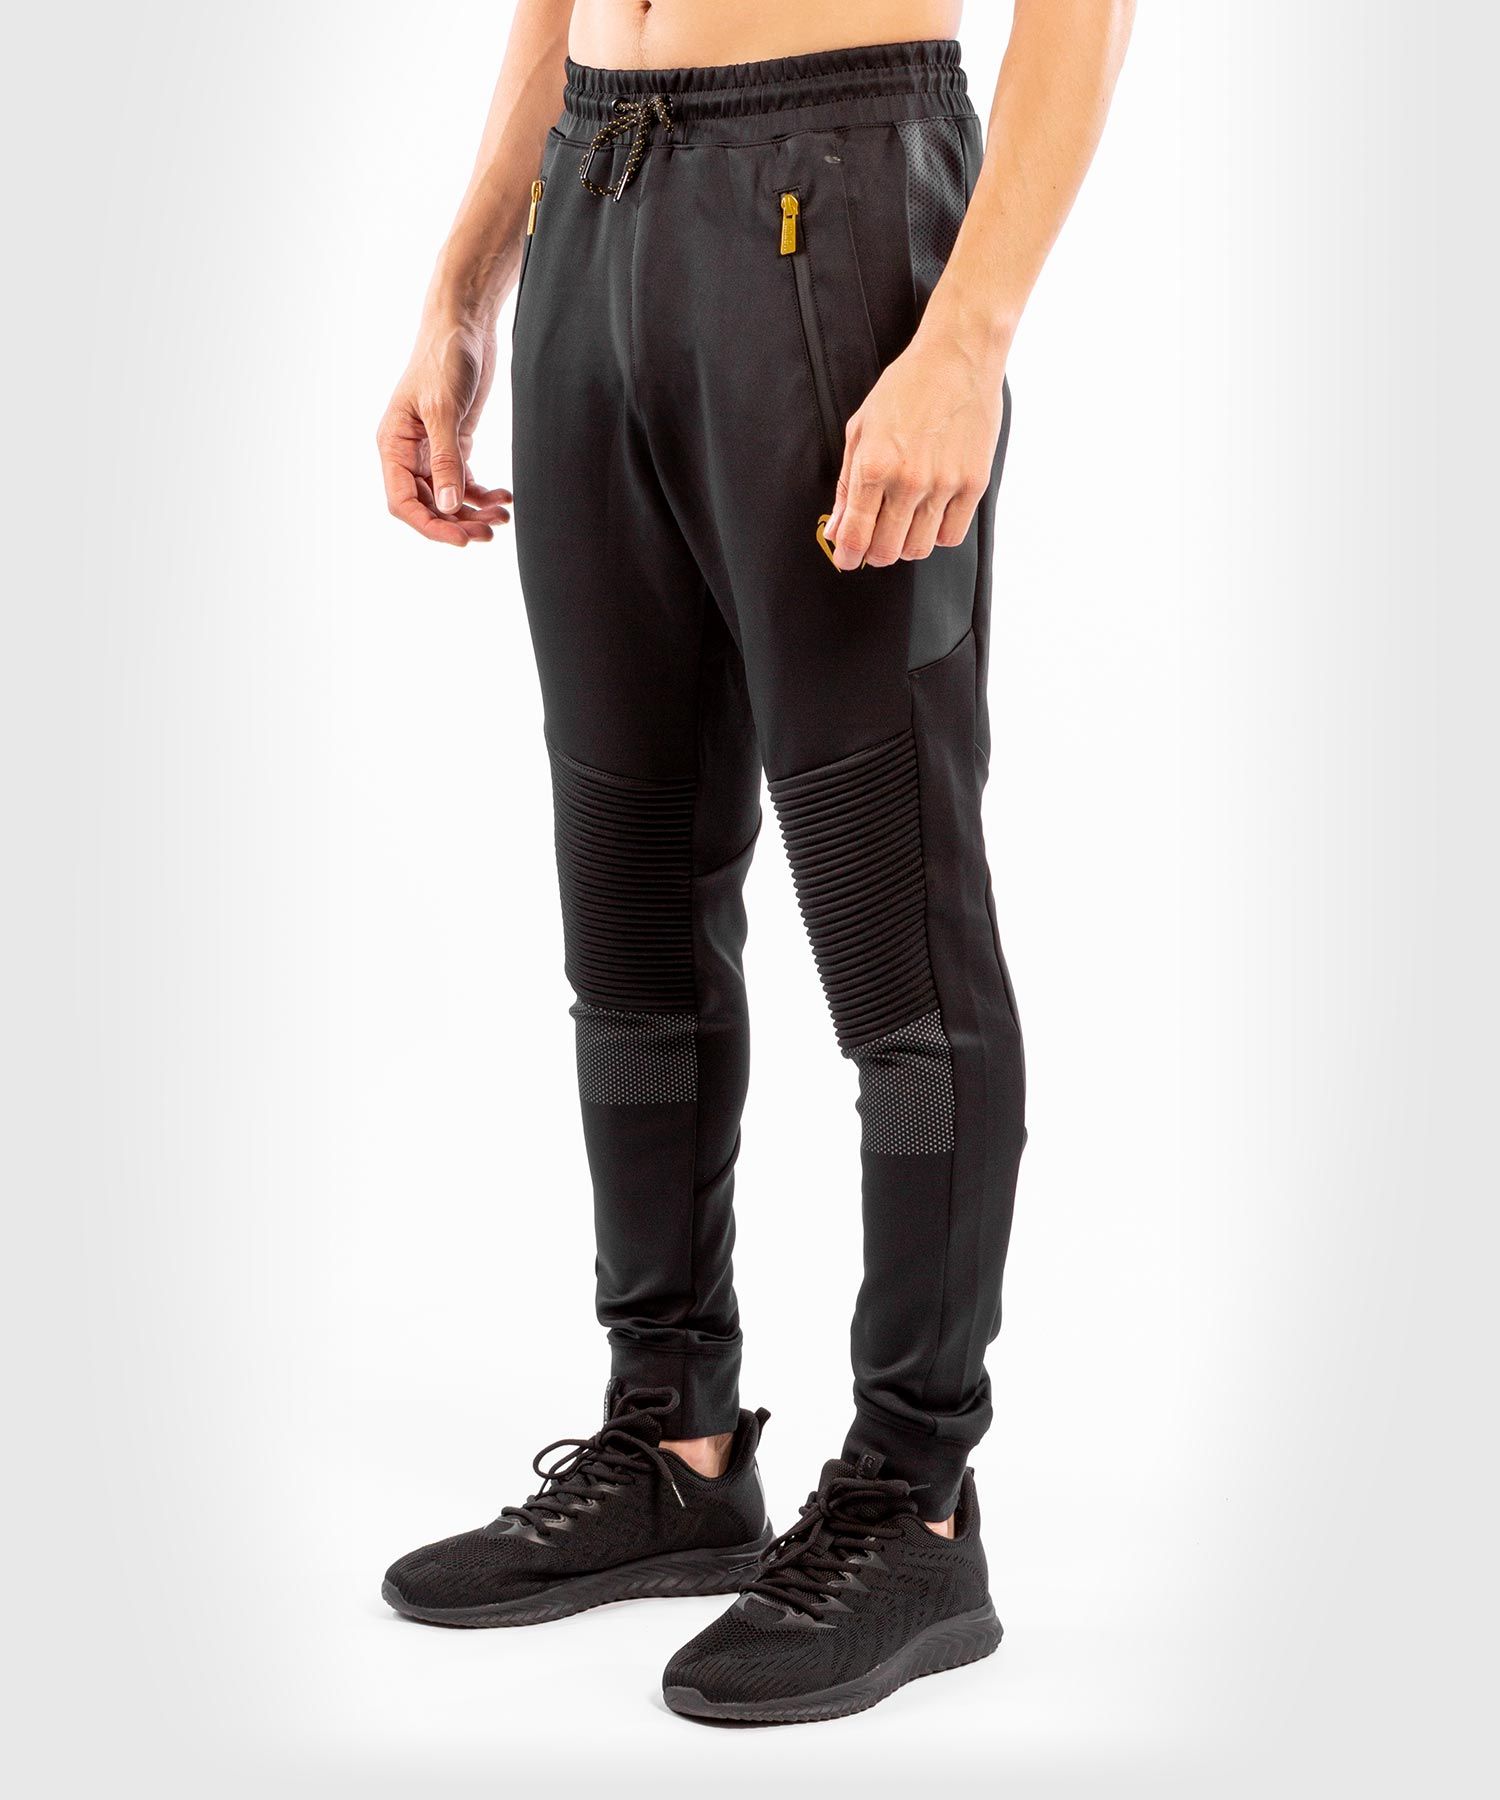 Pantalones de chándal Venum Athletics - Negro/Dorado